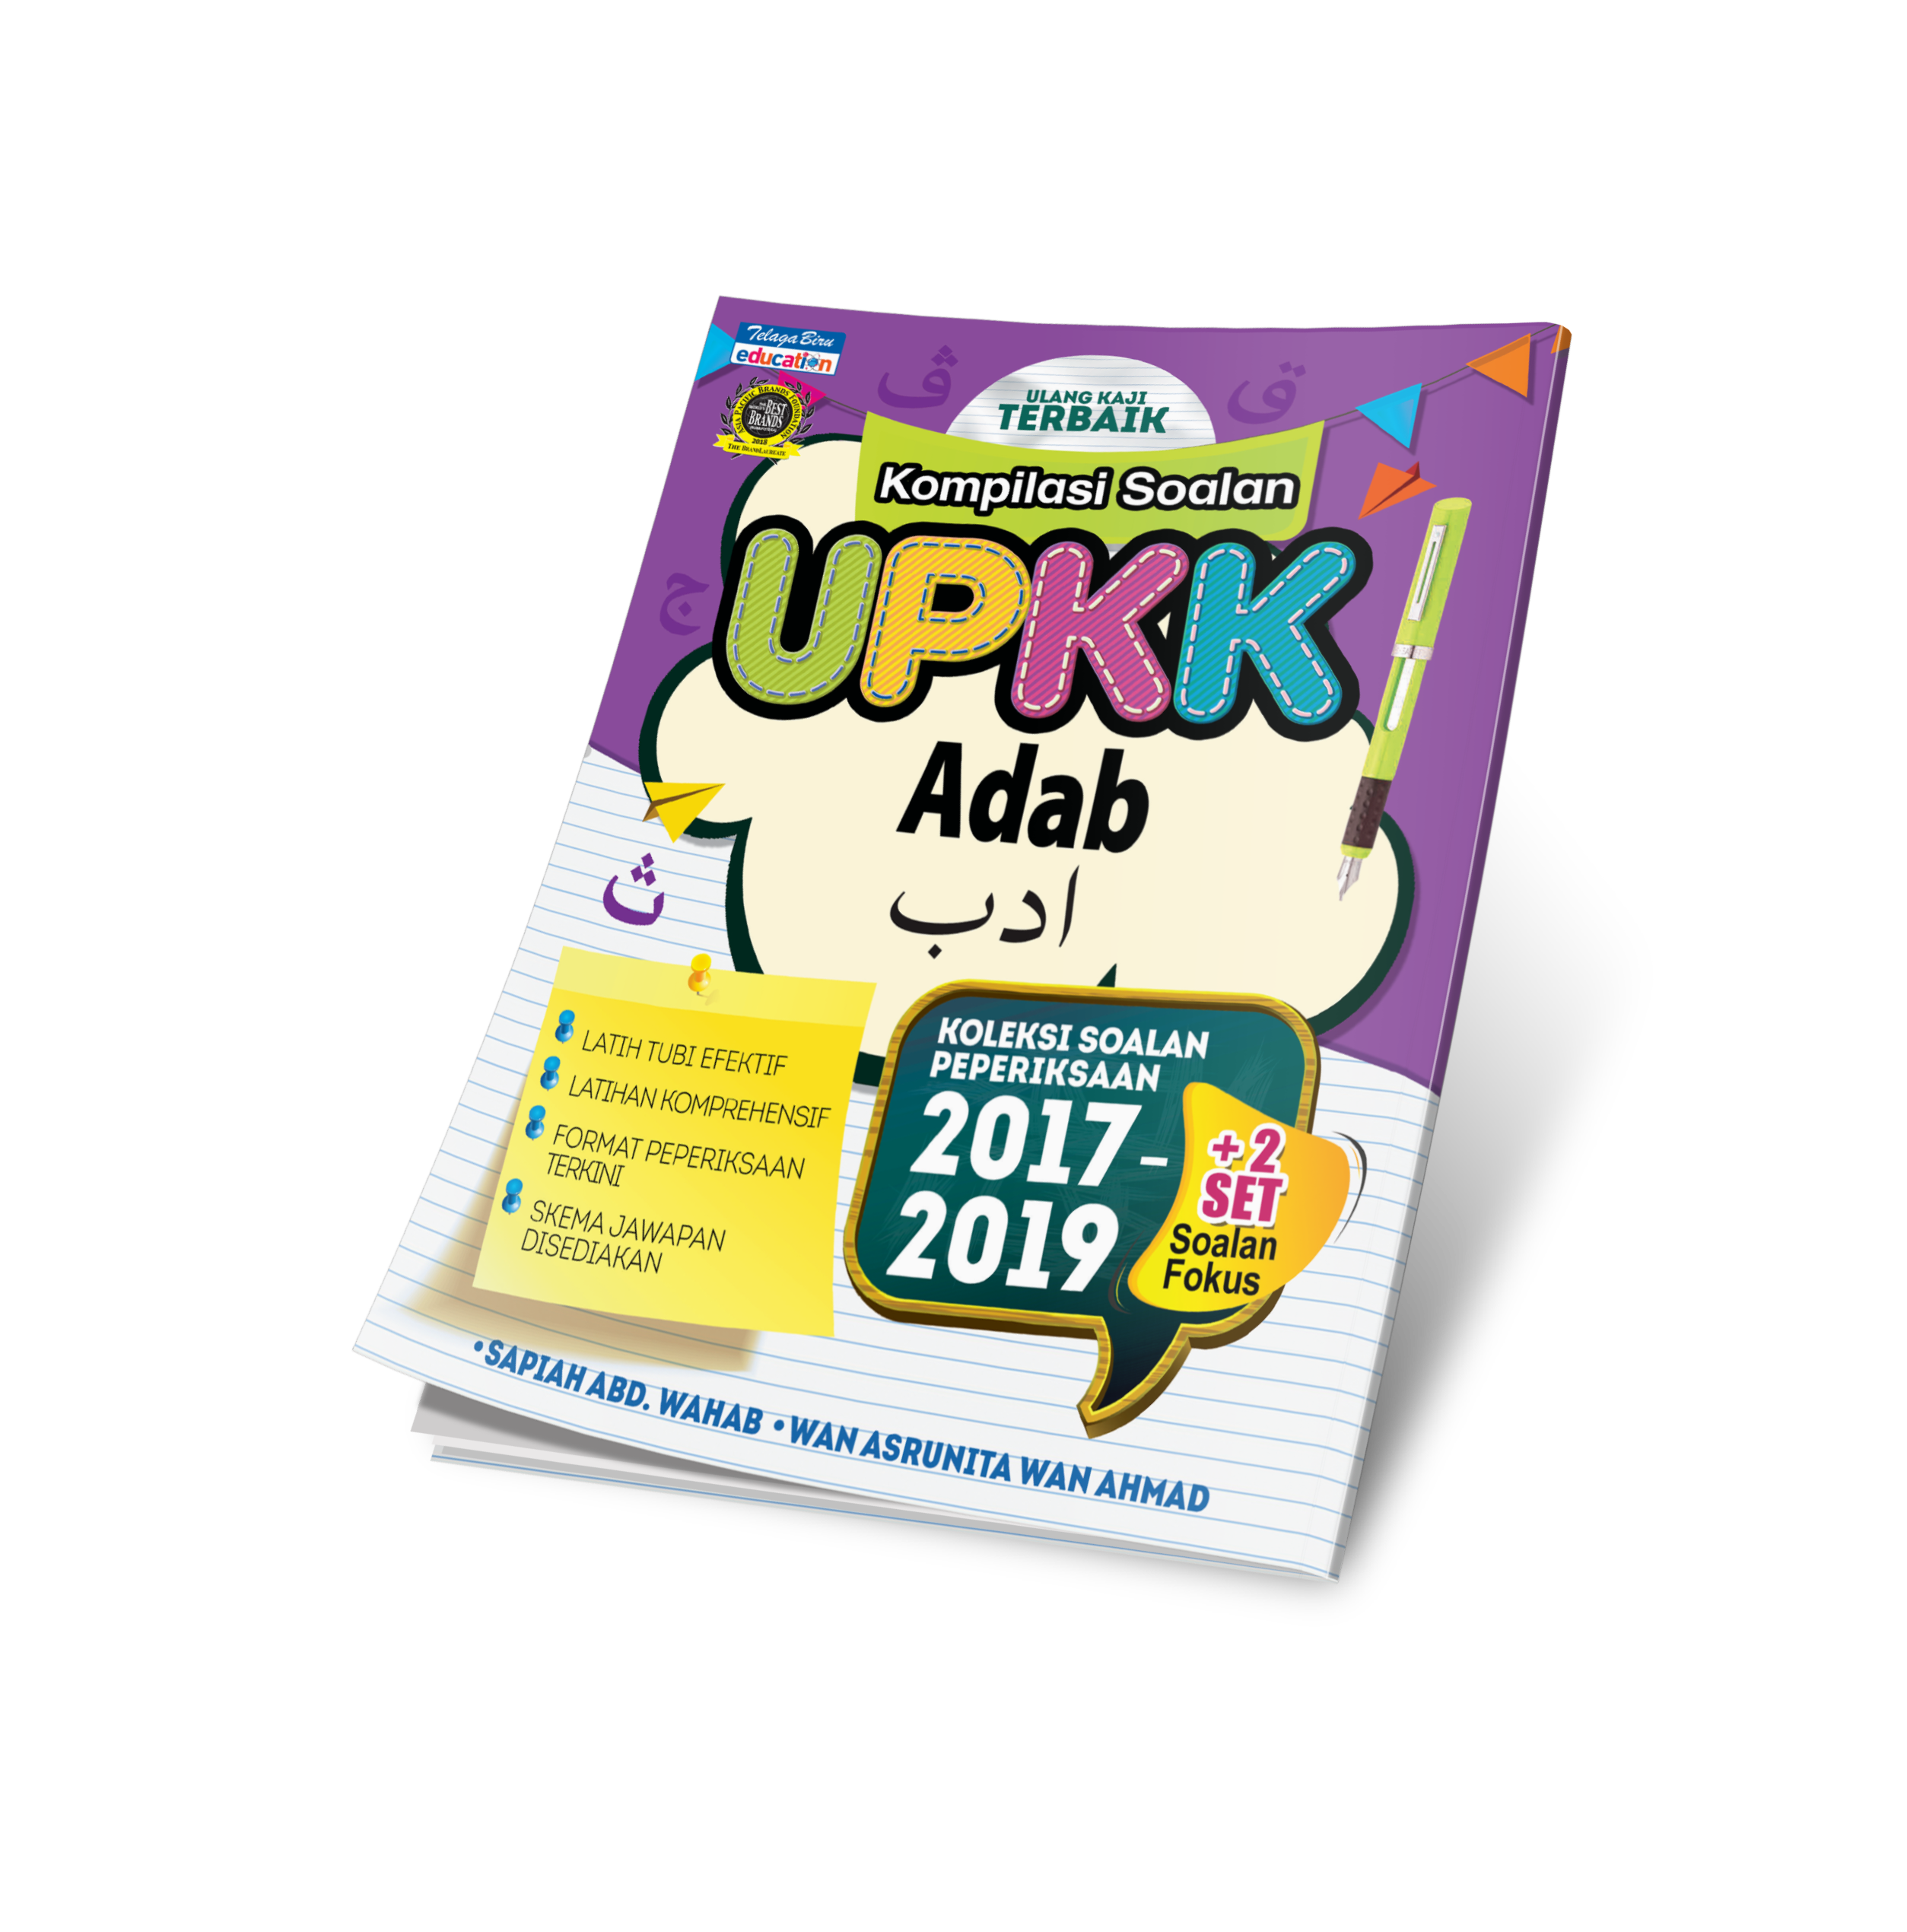 Kompilasi Soalan UPKK (Adab) - (TBBS1223)